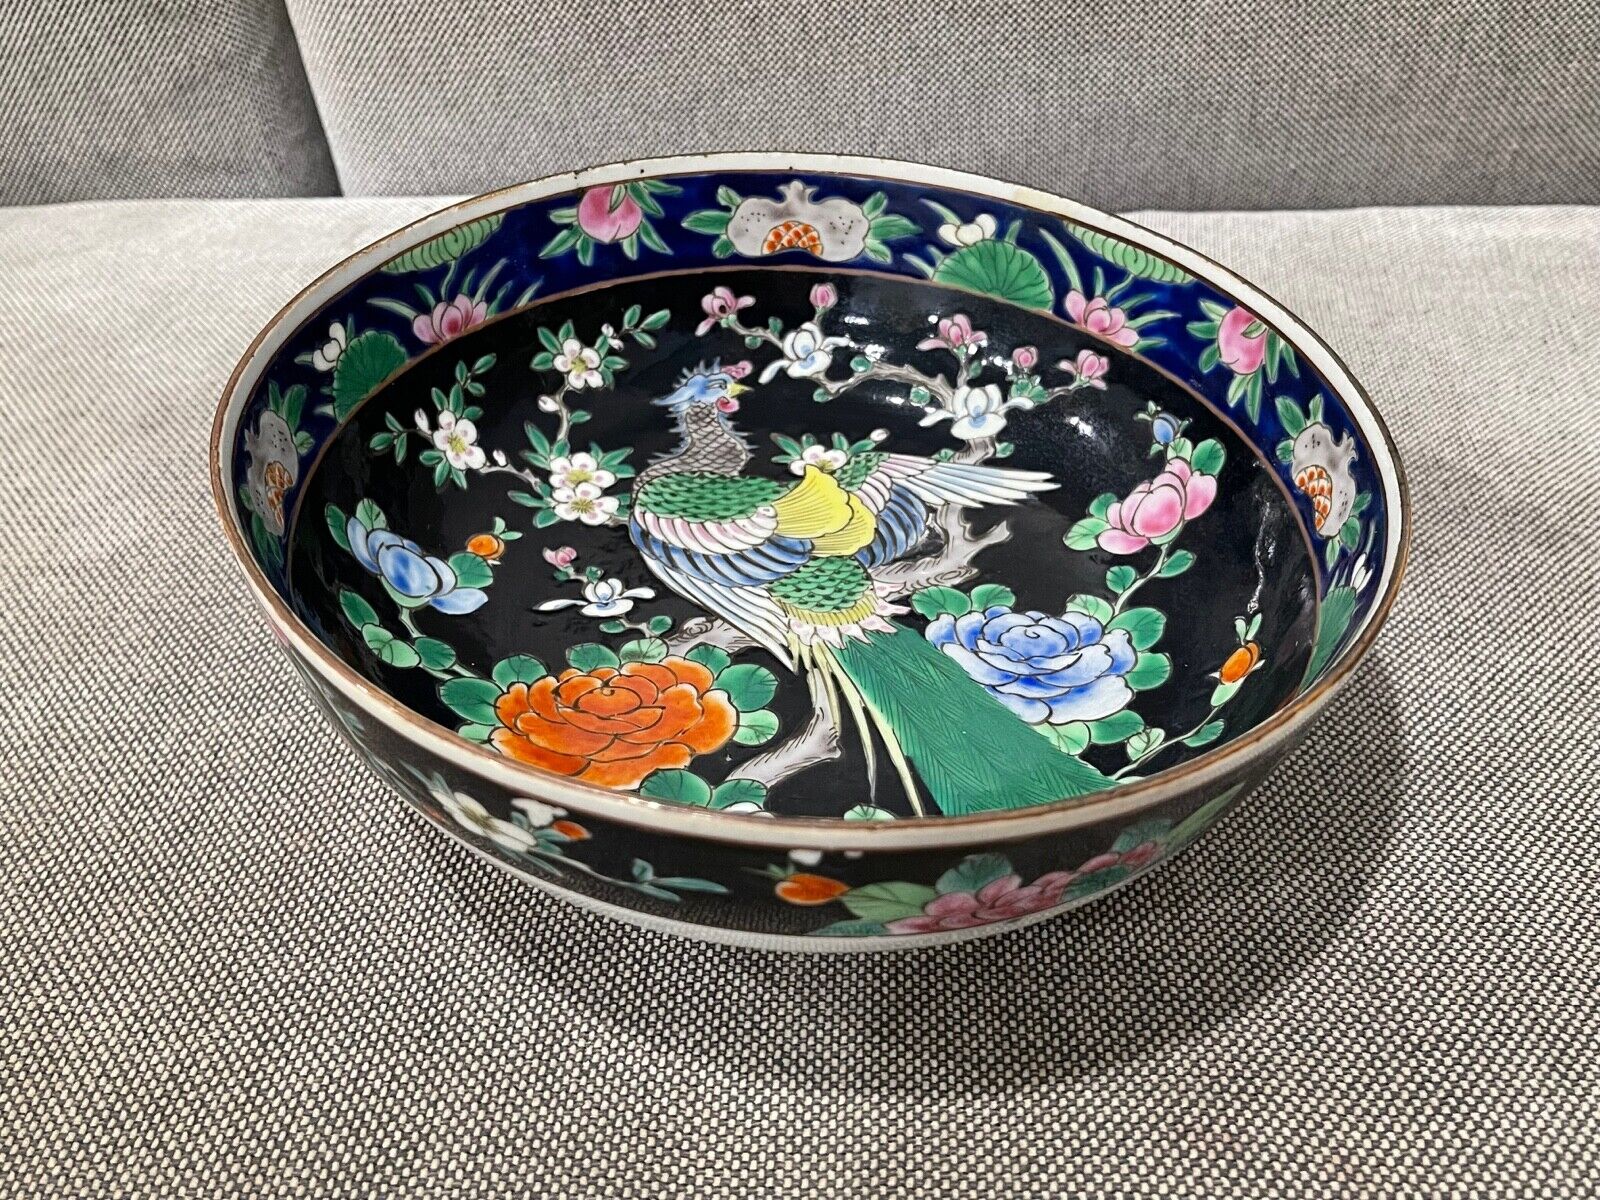 Vintage Chinese or Japanese Porcelain Bowl w/ Phoenix & Flowers Decoration